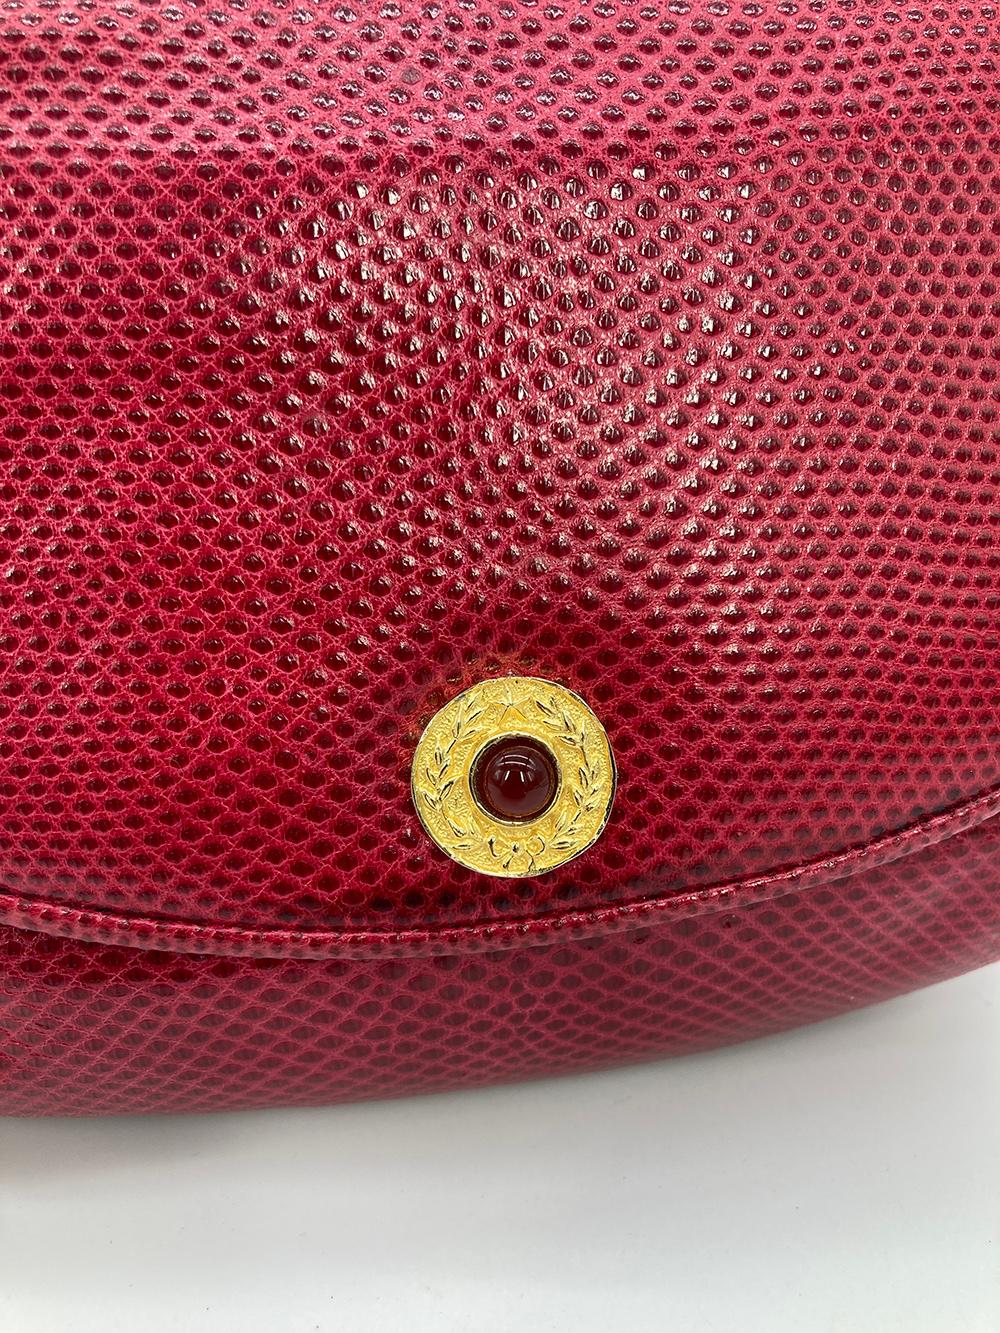 Judith Leiber Red Lizard Tassel Charm Strap Clutch Shoulder Bag In Fair Condition For Sale In Philadelphia, PA